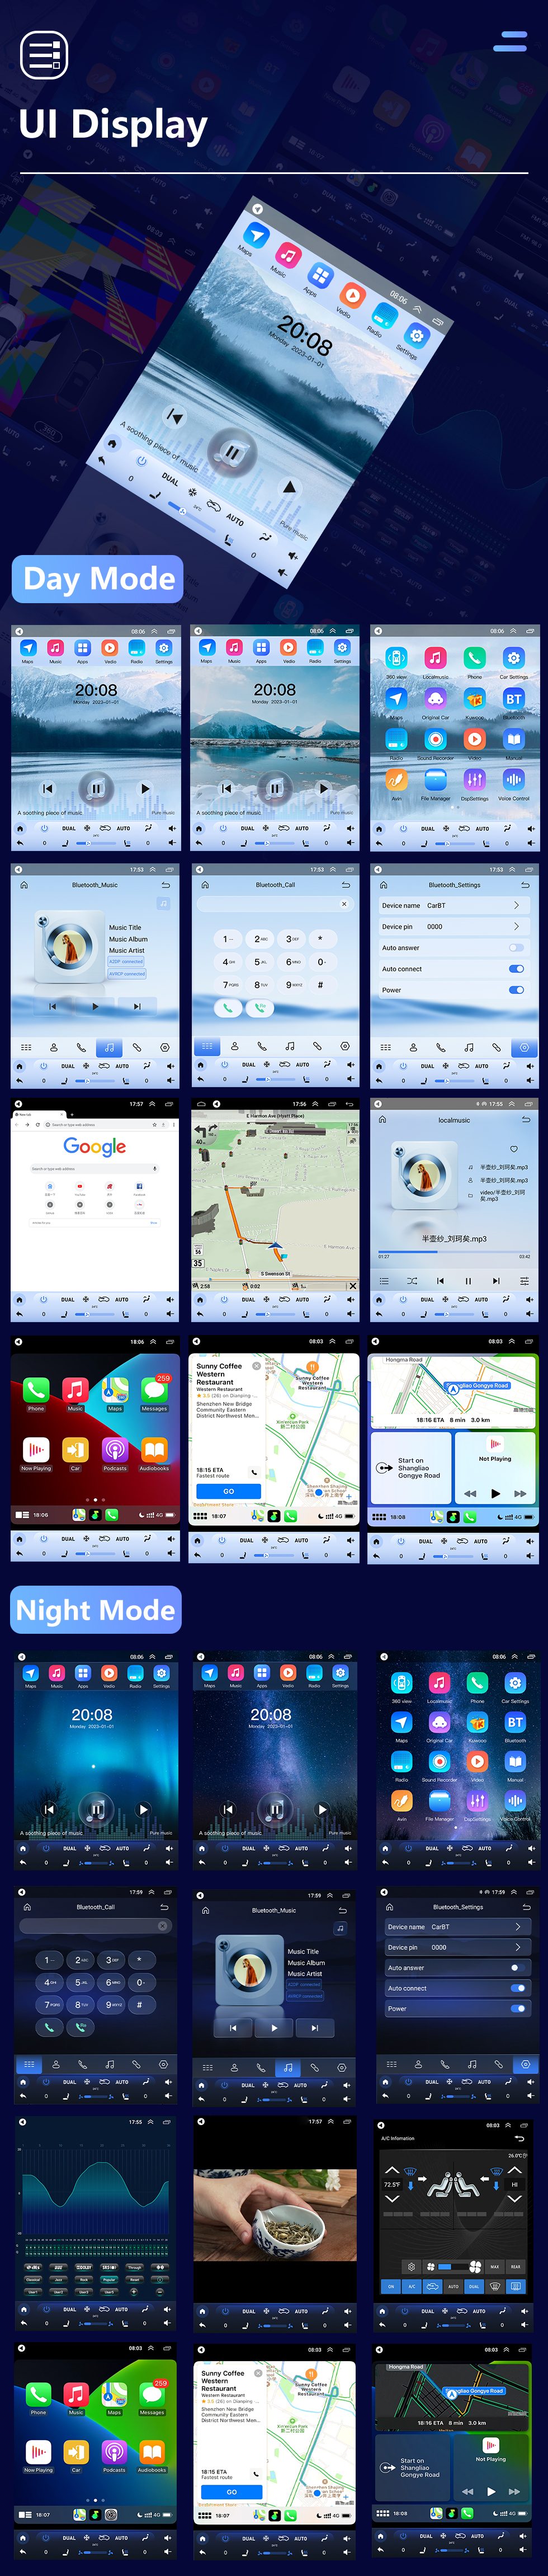 Seicane Pantalla táctil HD 9.7 pulgadas Android 10.0 para 2008-2011 Peugeot C-QUATRE Radio Sistema de navegación GPS Bluetooth Carplay compatible Cámara de respaldo DVR Control del volante TPMS